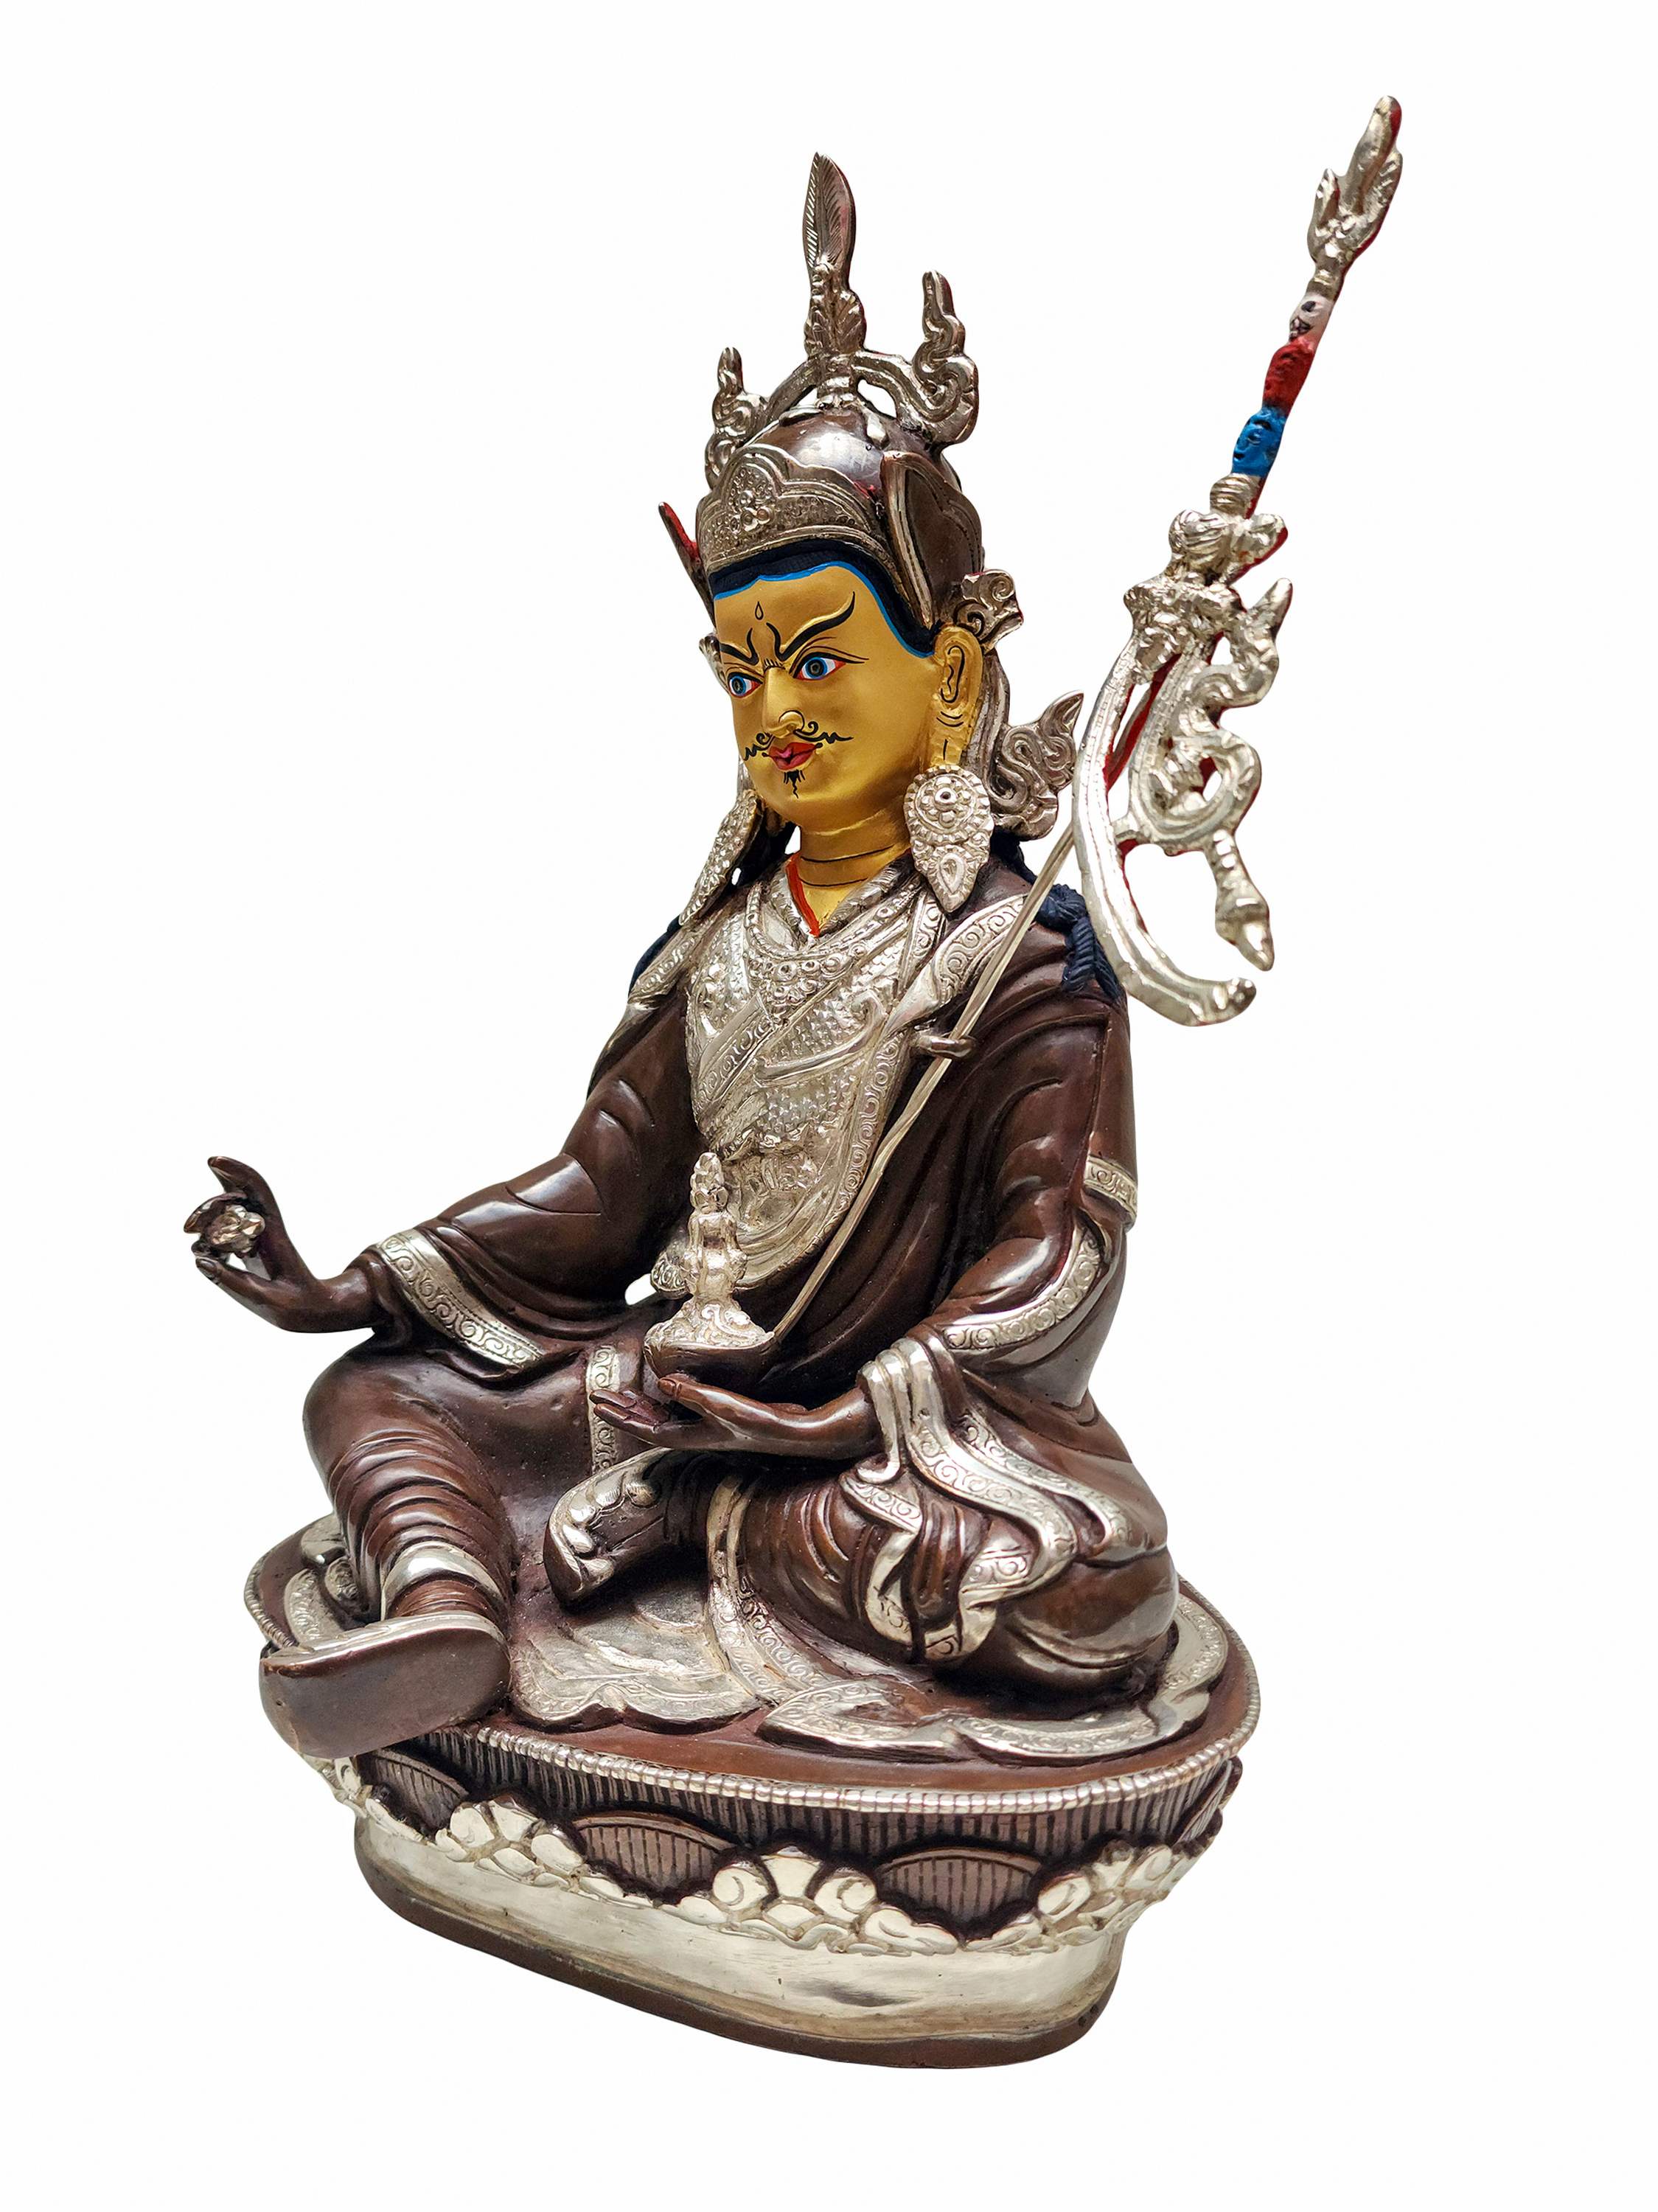 Padmasambhava Or Guru Rinpoche, Buddhist Handmade Statue, silver Plated And Chocolate Oxidized, face Painted